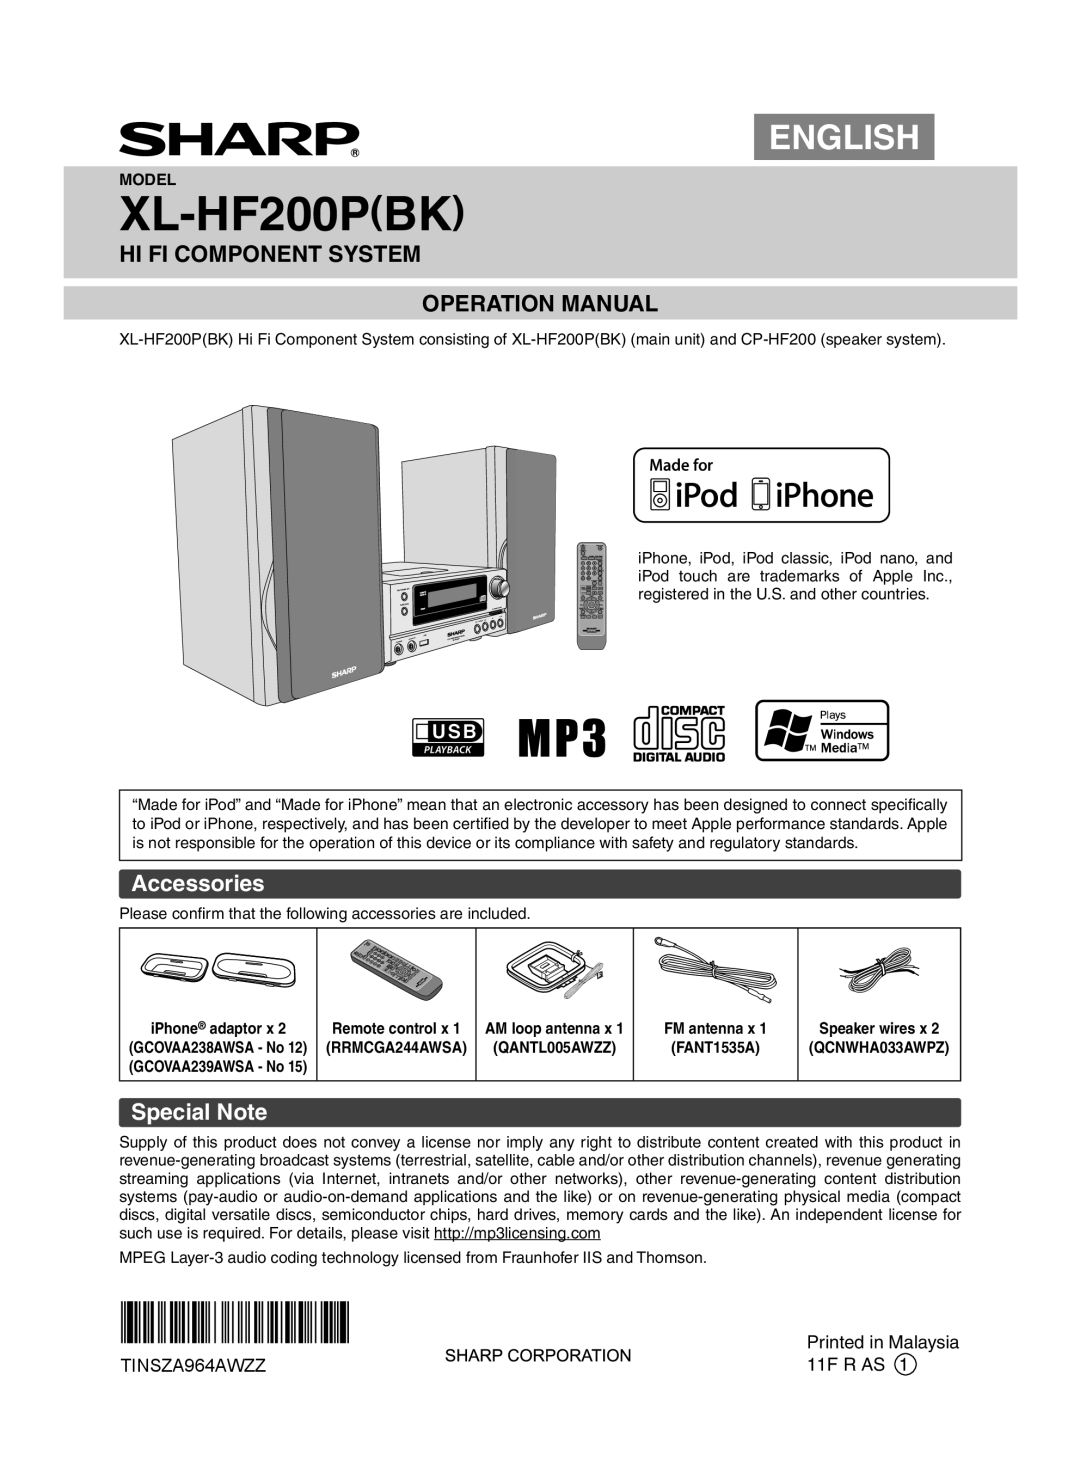 Sharp XL-HF200P(BK) operation manual Accessories, Special Note, XL-HF200PBK, English, TINSZA964AWZZ 